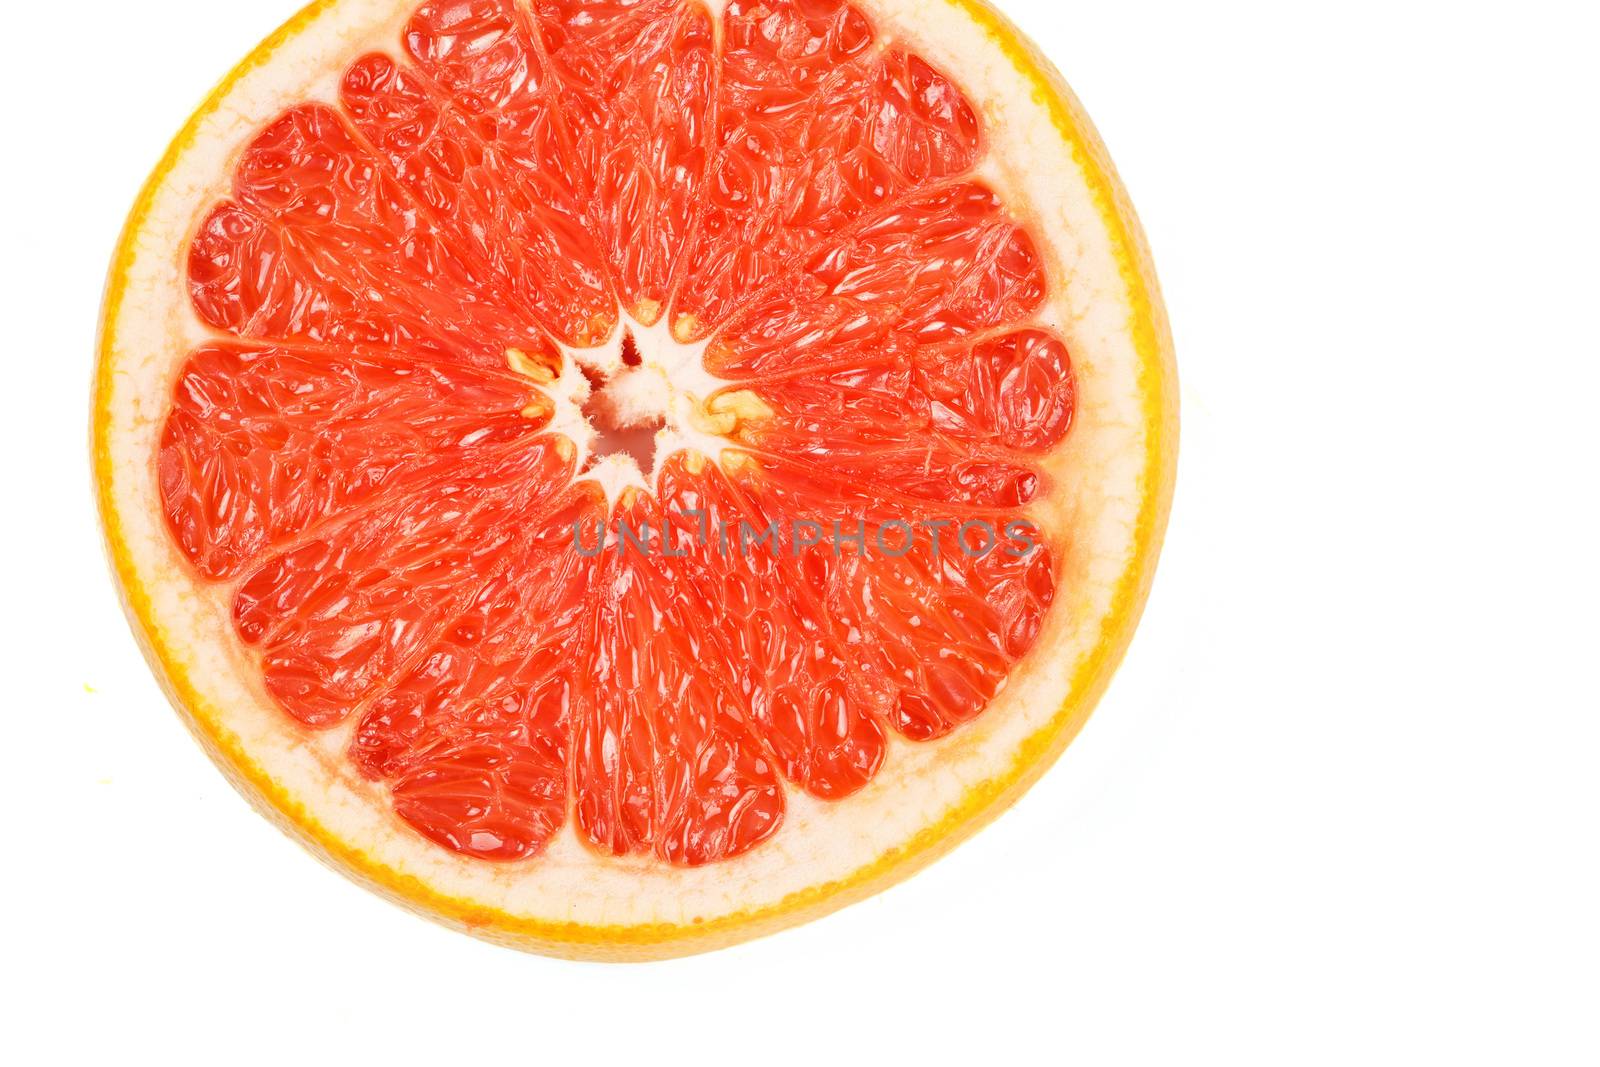 Slice of red grapefruit by gorov108